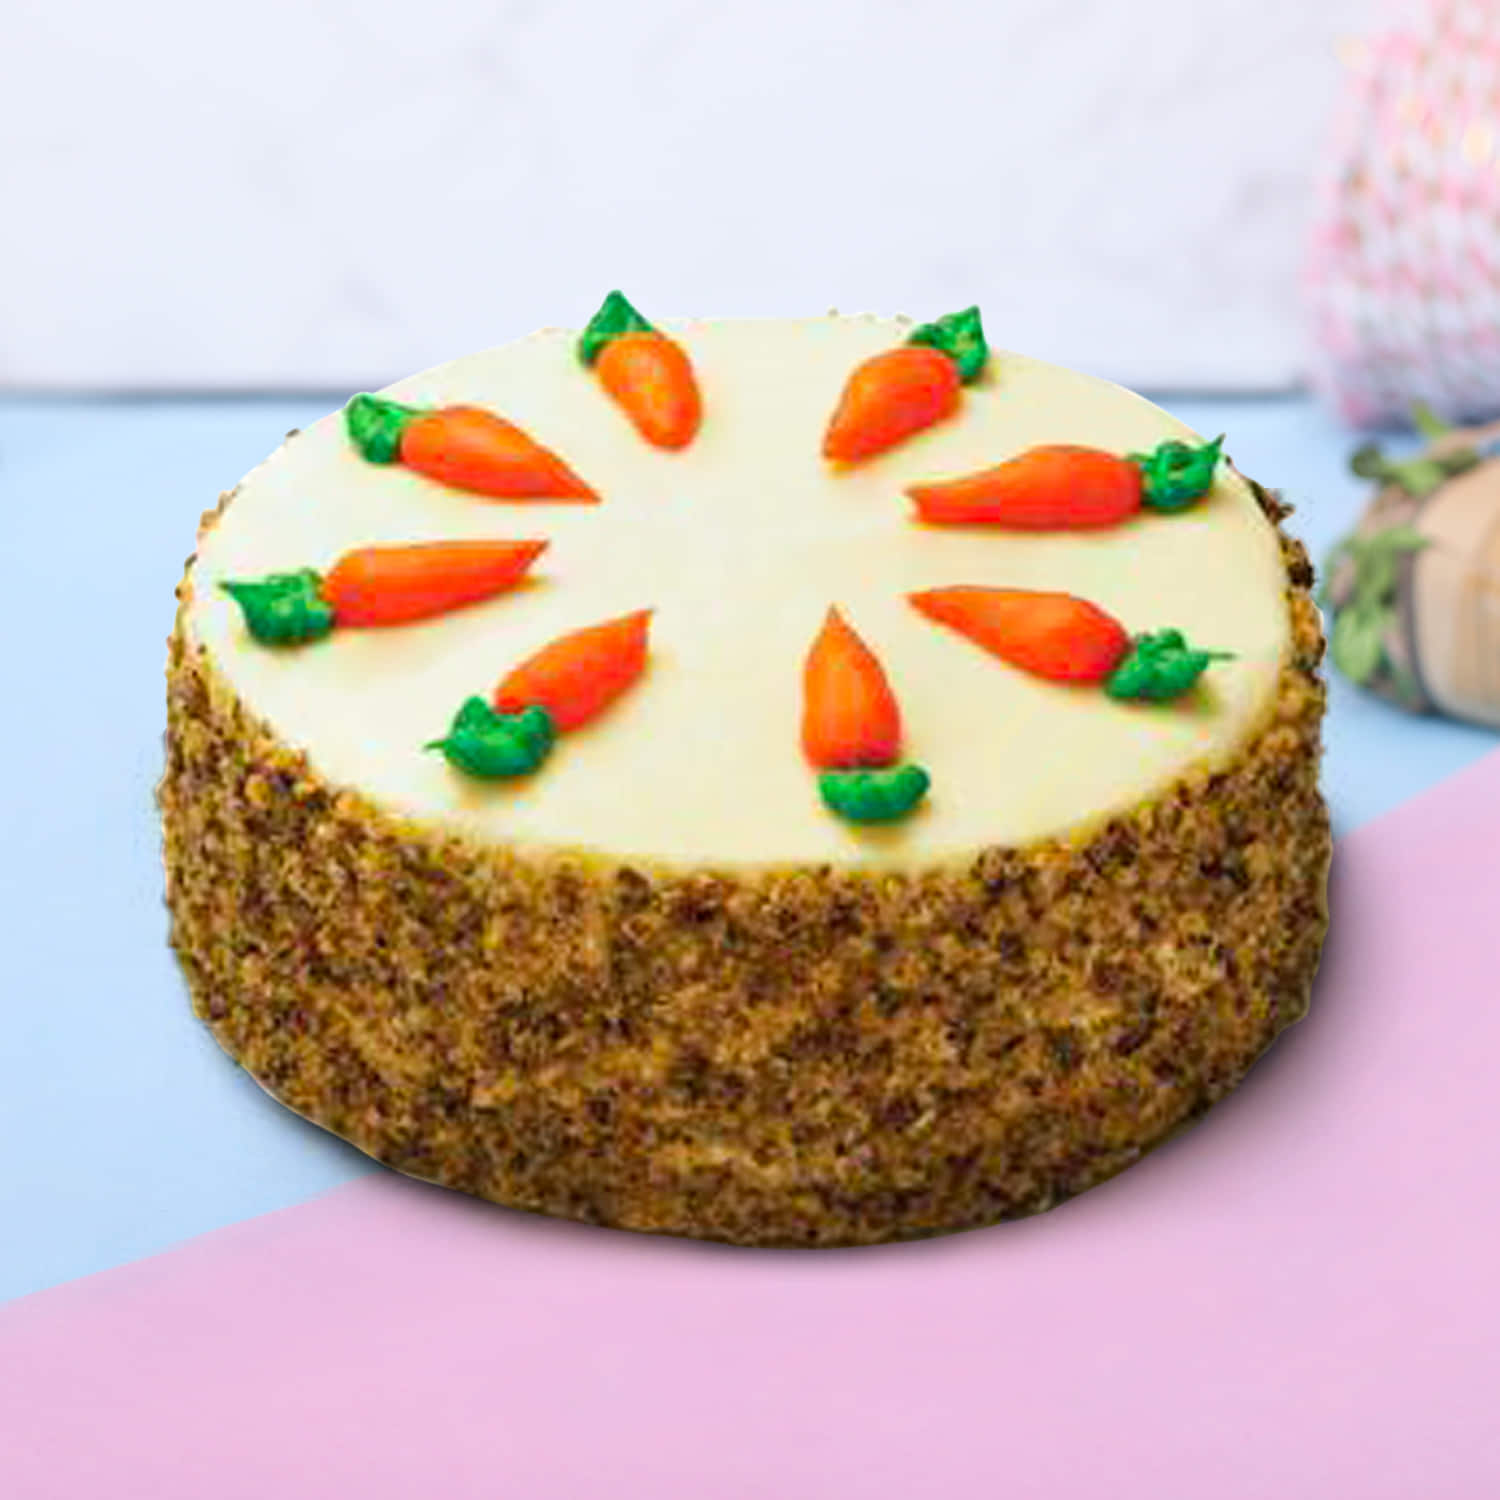 Carrot Cake Recipe with Walnuts and Raisins | Easy Carrot Cake Recipe -  YouTube